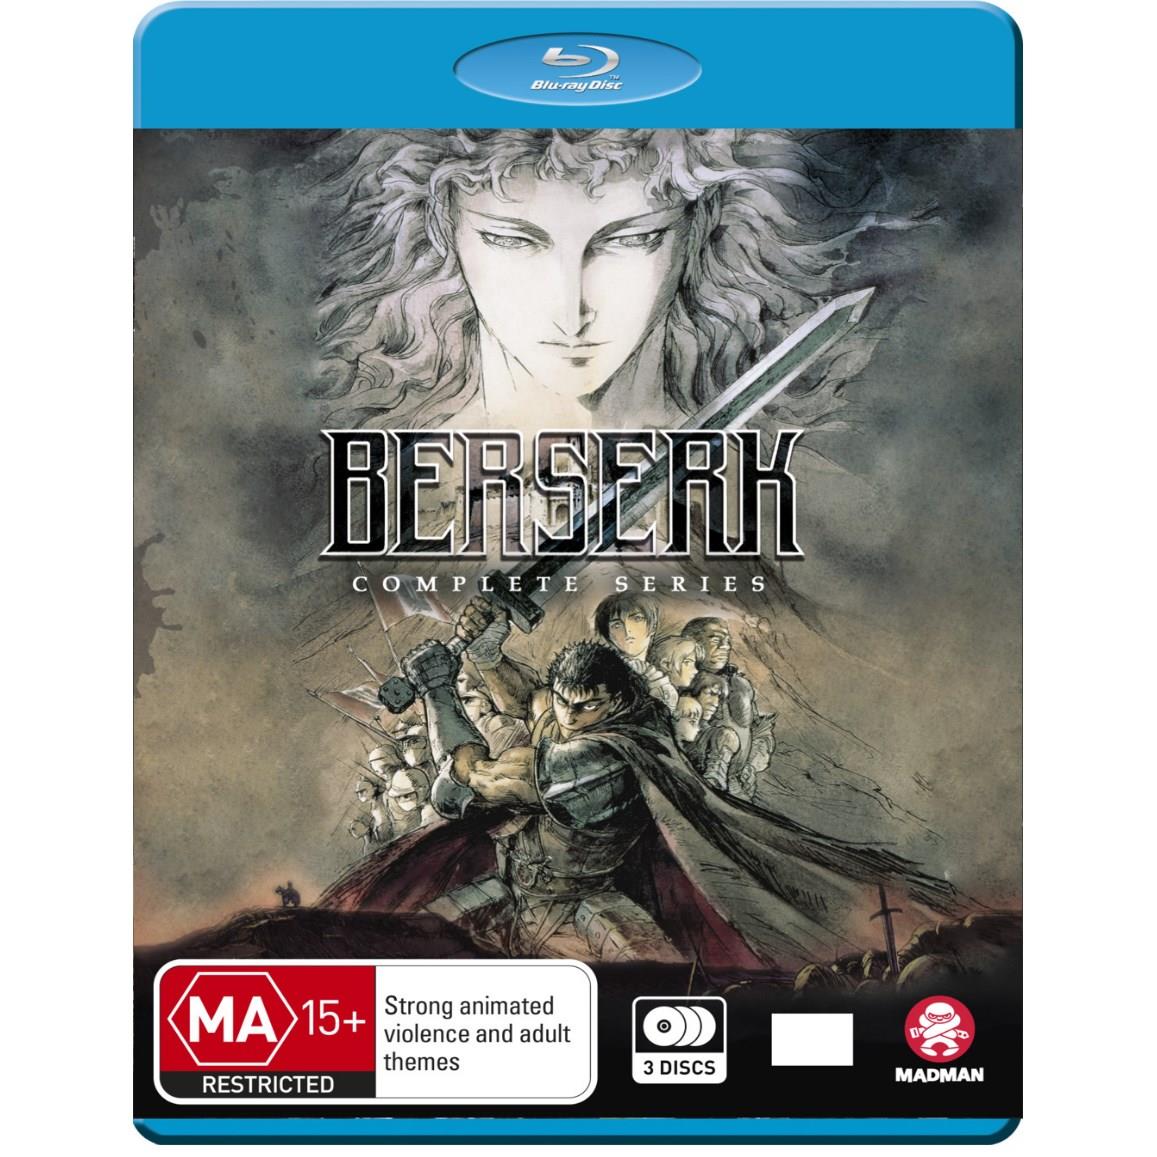  Berserk Collection (Standard Edition) [Blu-ray] : Movies & TV